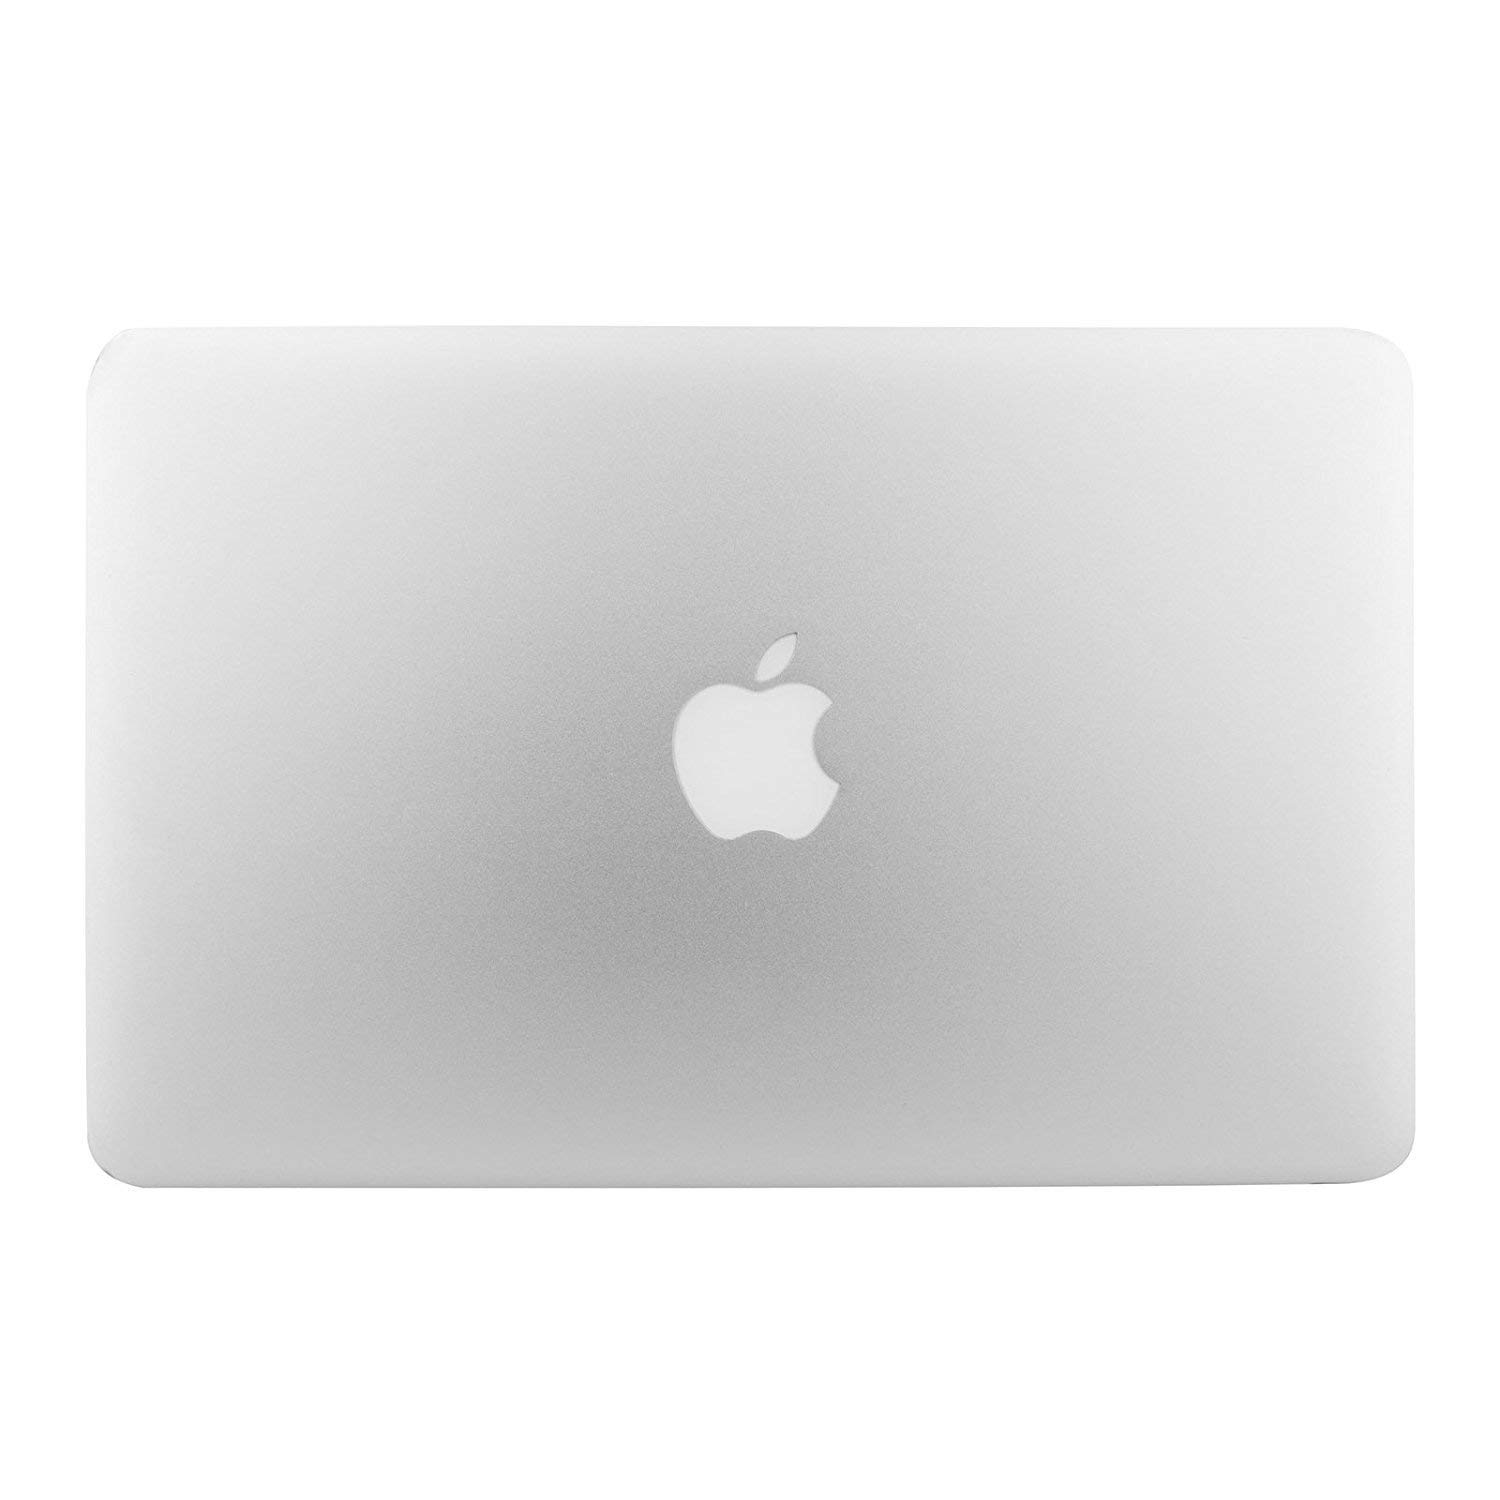 Apple MacBook Air MJVE2LL/A - 13-inch Laptop - 8GB RAM, 512GB SSD, Intel Core i5 (Renewed)